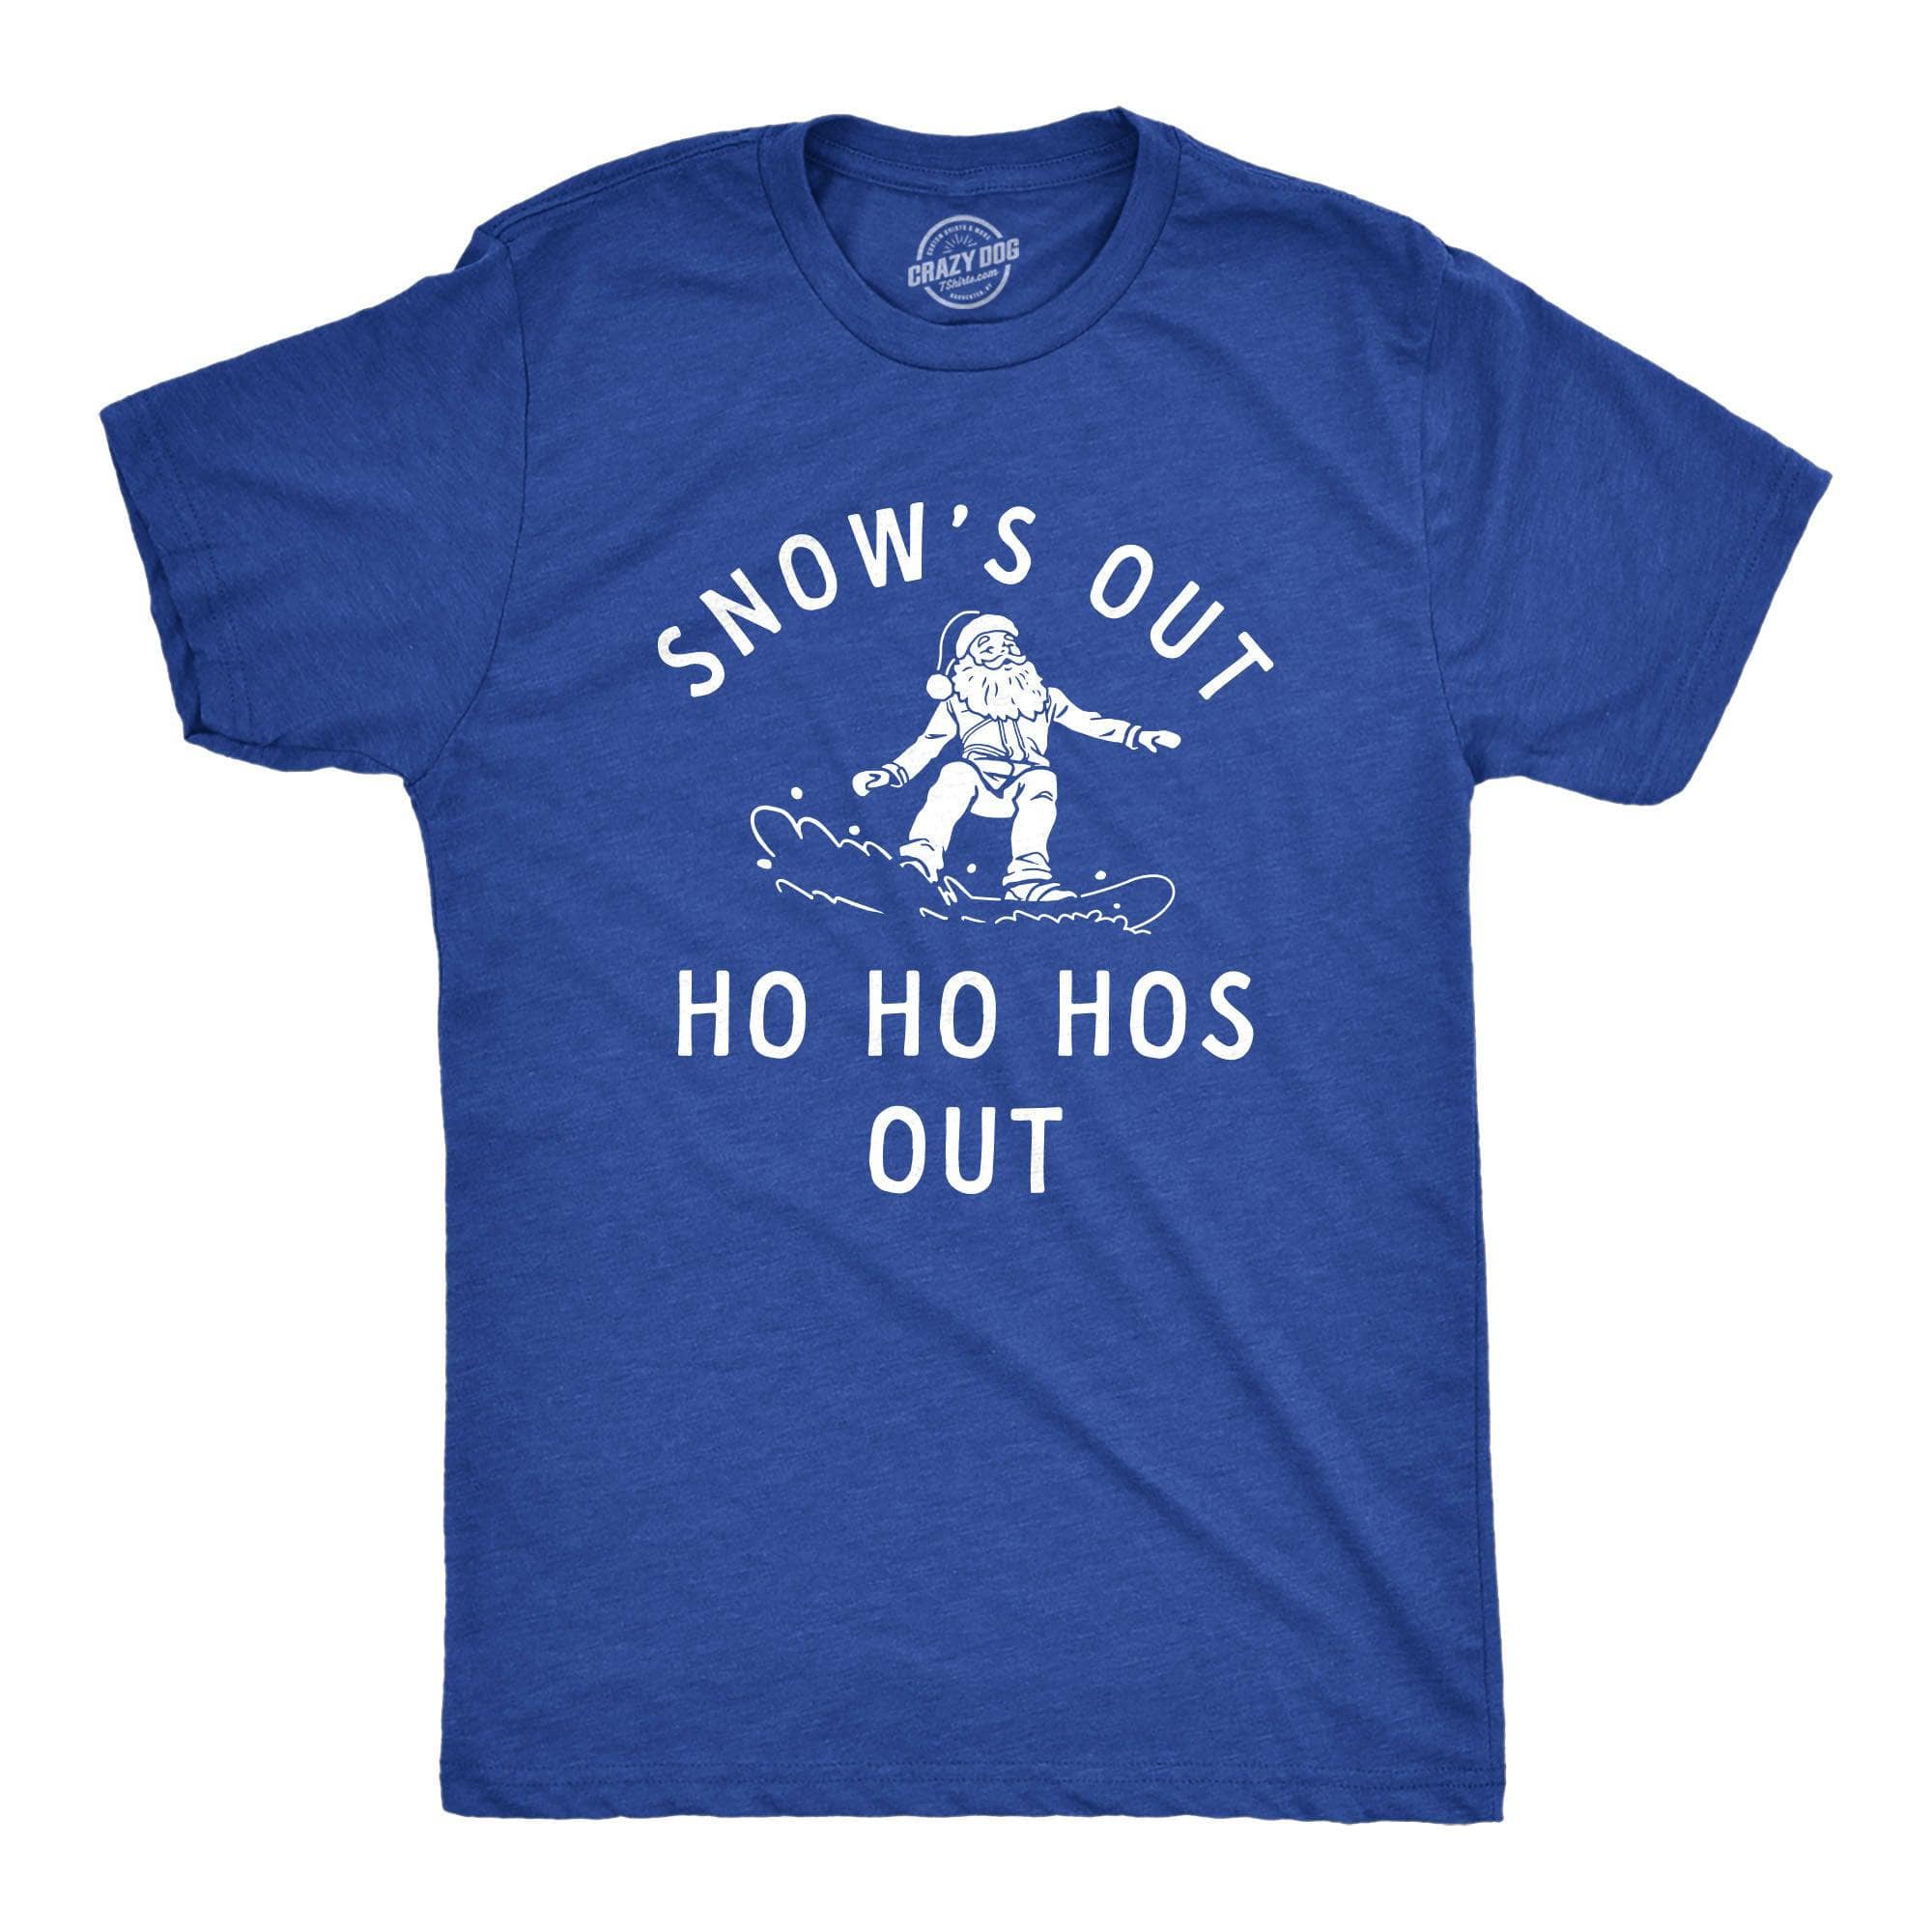 Snows Out Ho Ho Hos Out Men's Tshirt  -  Crazy Dog T-Shirts